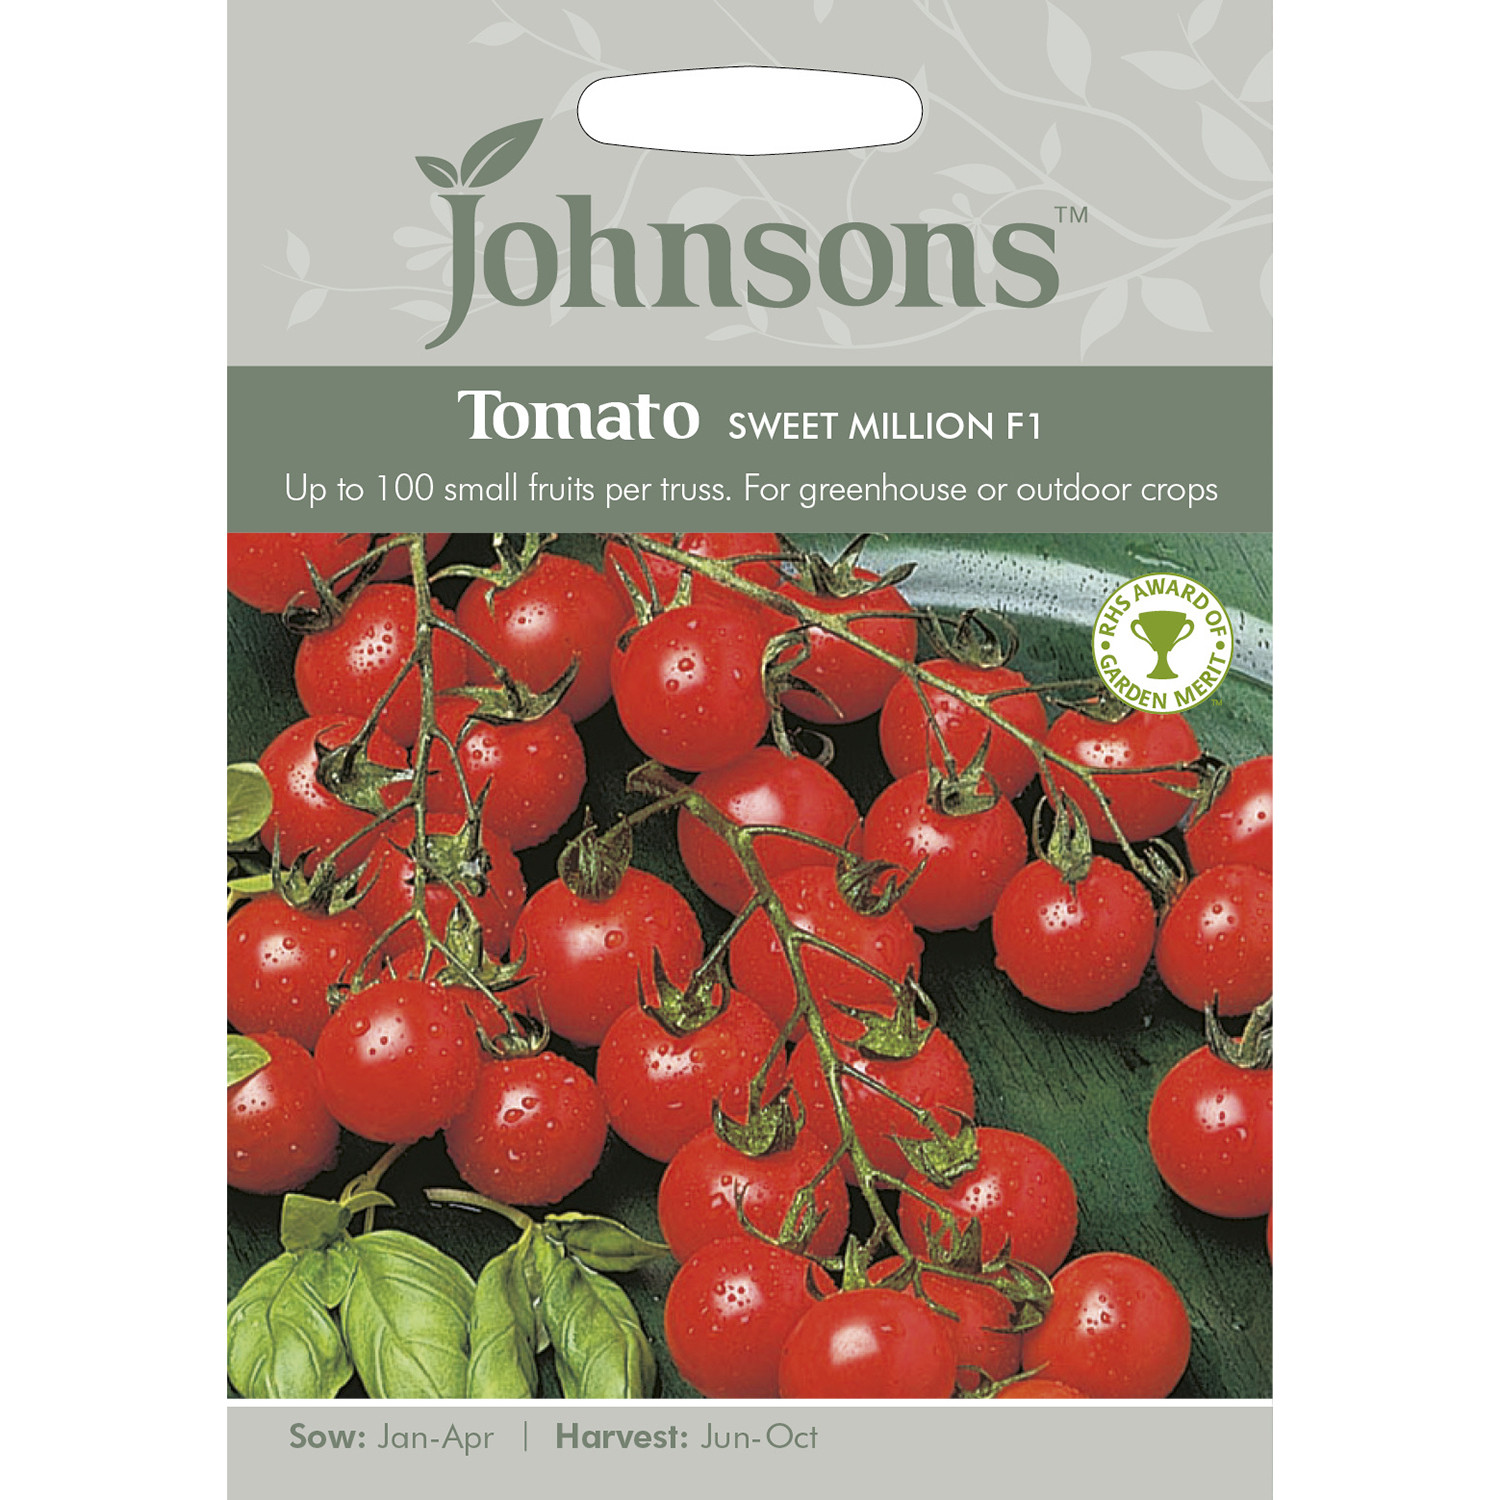 Johnsons Sweet Million F1 Tomato Seeds Image 2